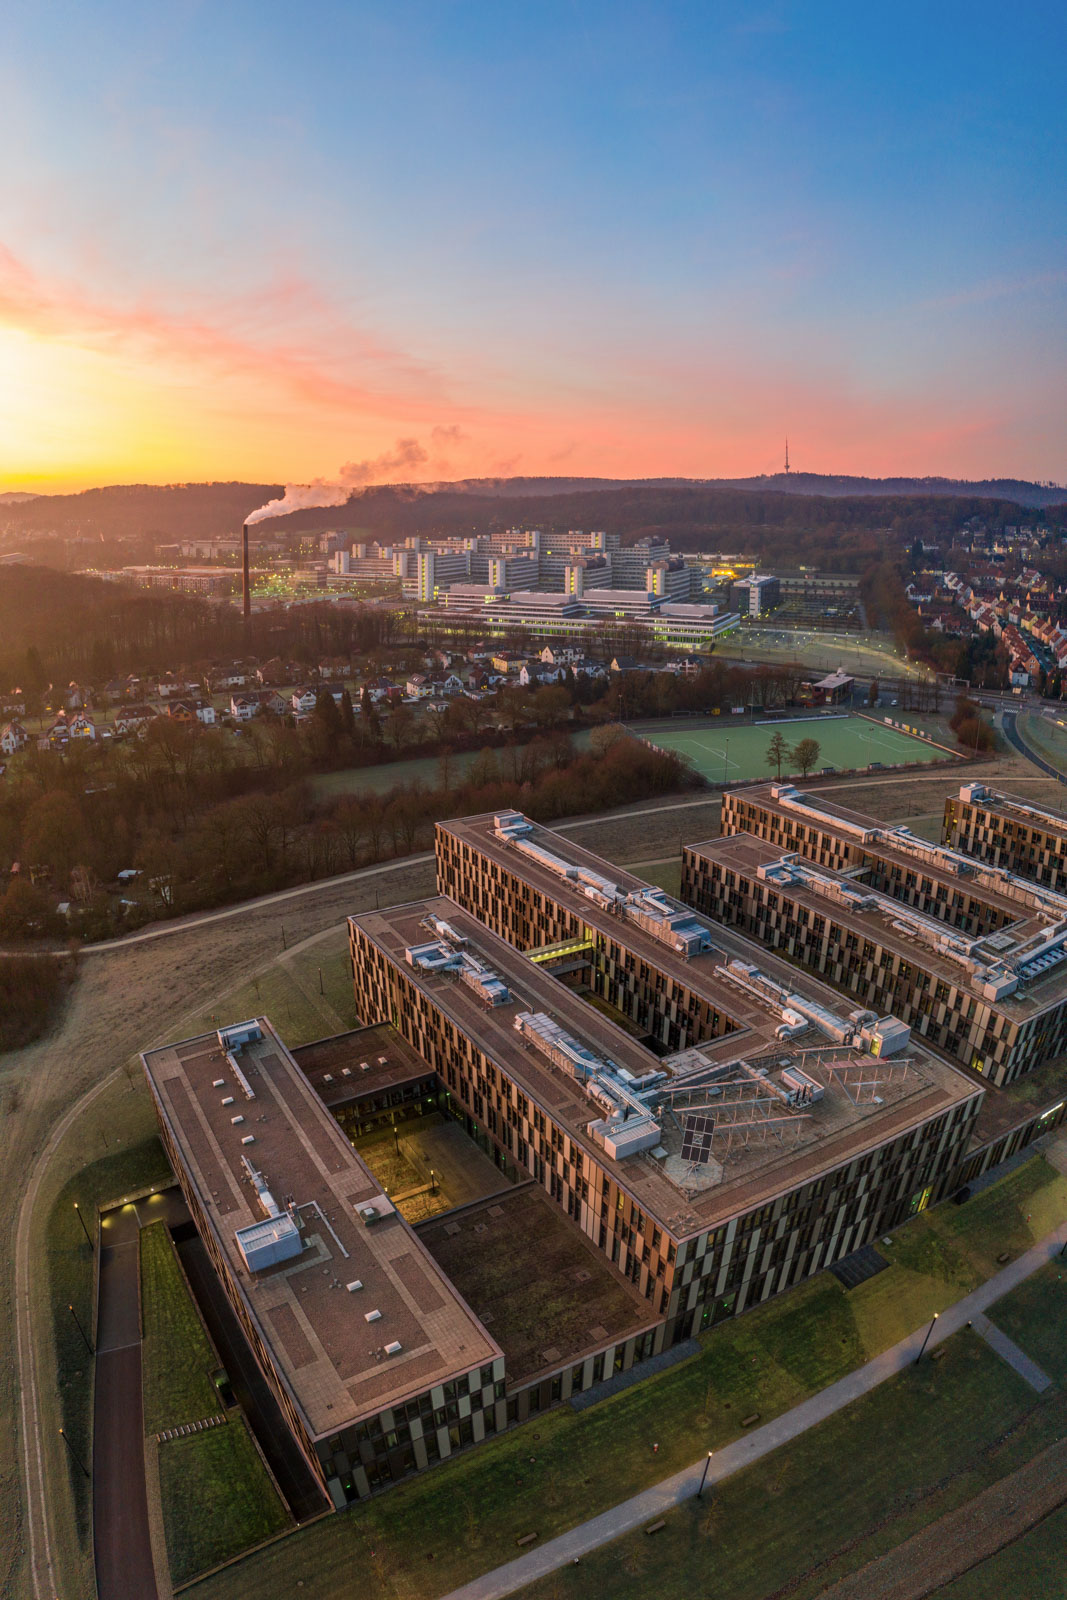 University of Applied Sciences and University of Bielefeld in December 2019 (Bielefeld, Germany).